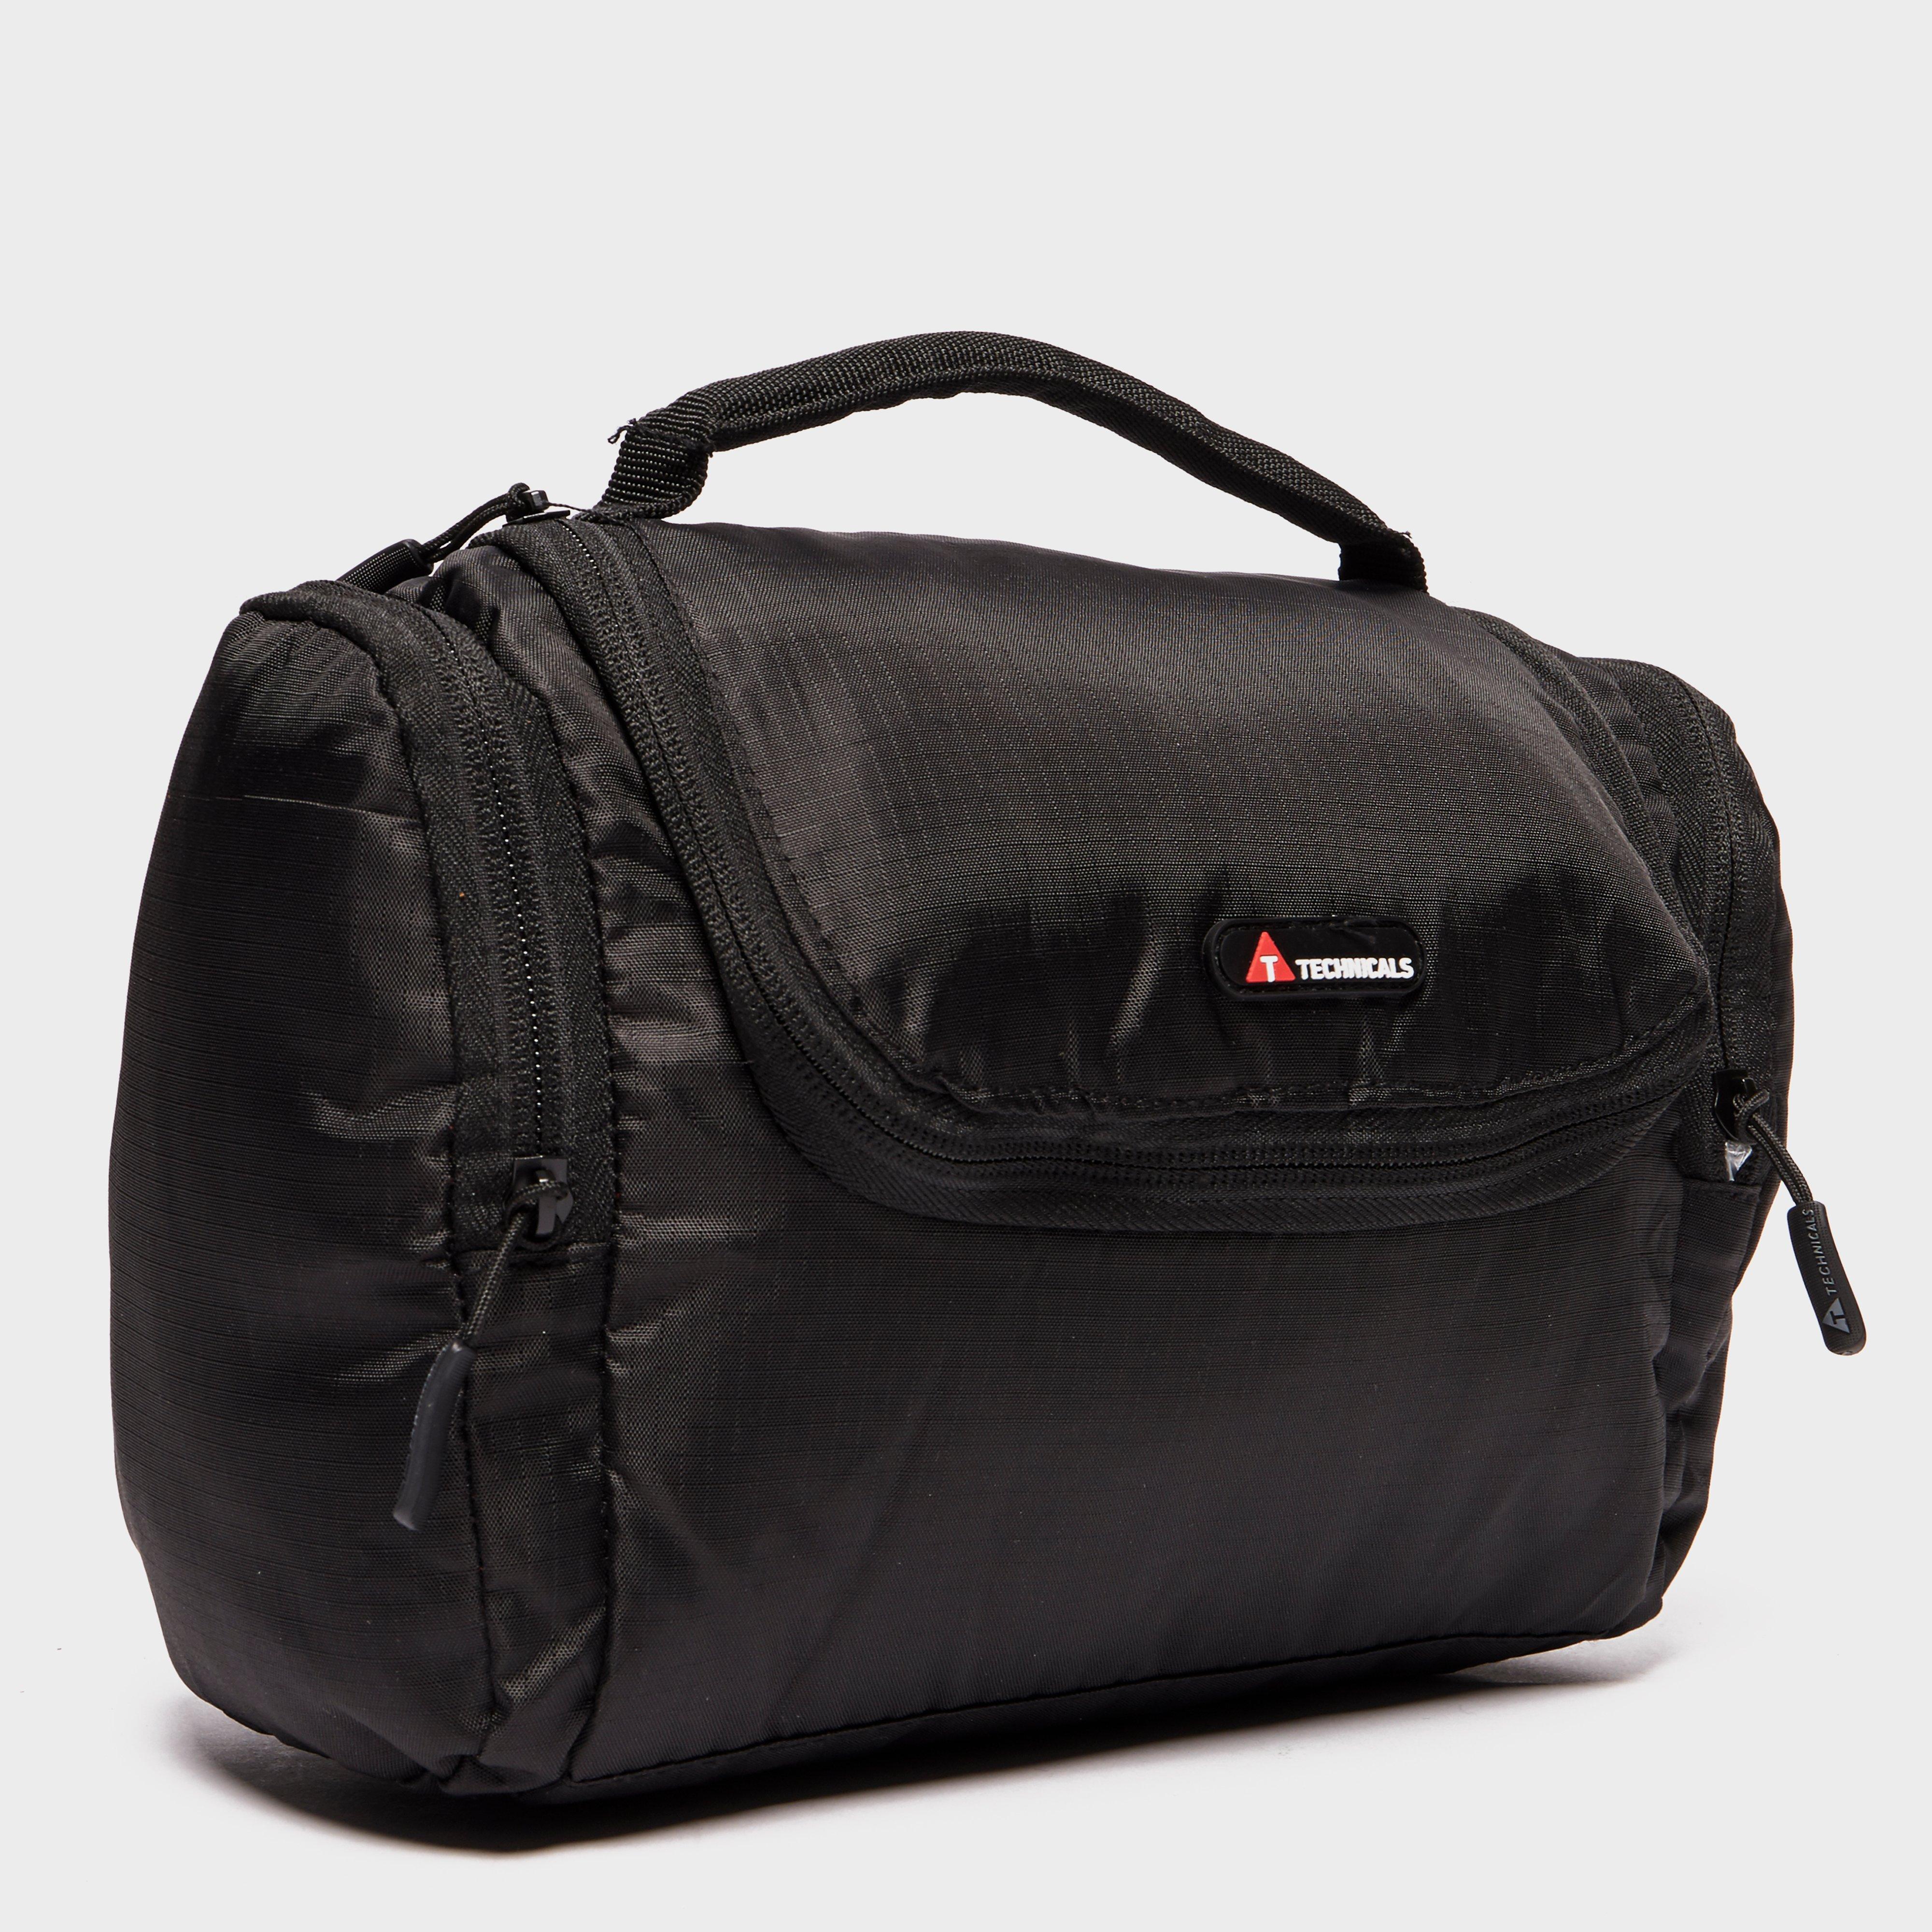 Technicals Travel Wash Bag  Black